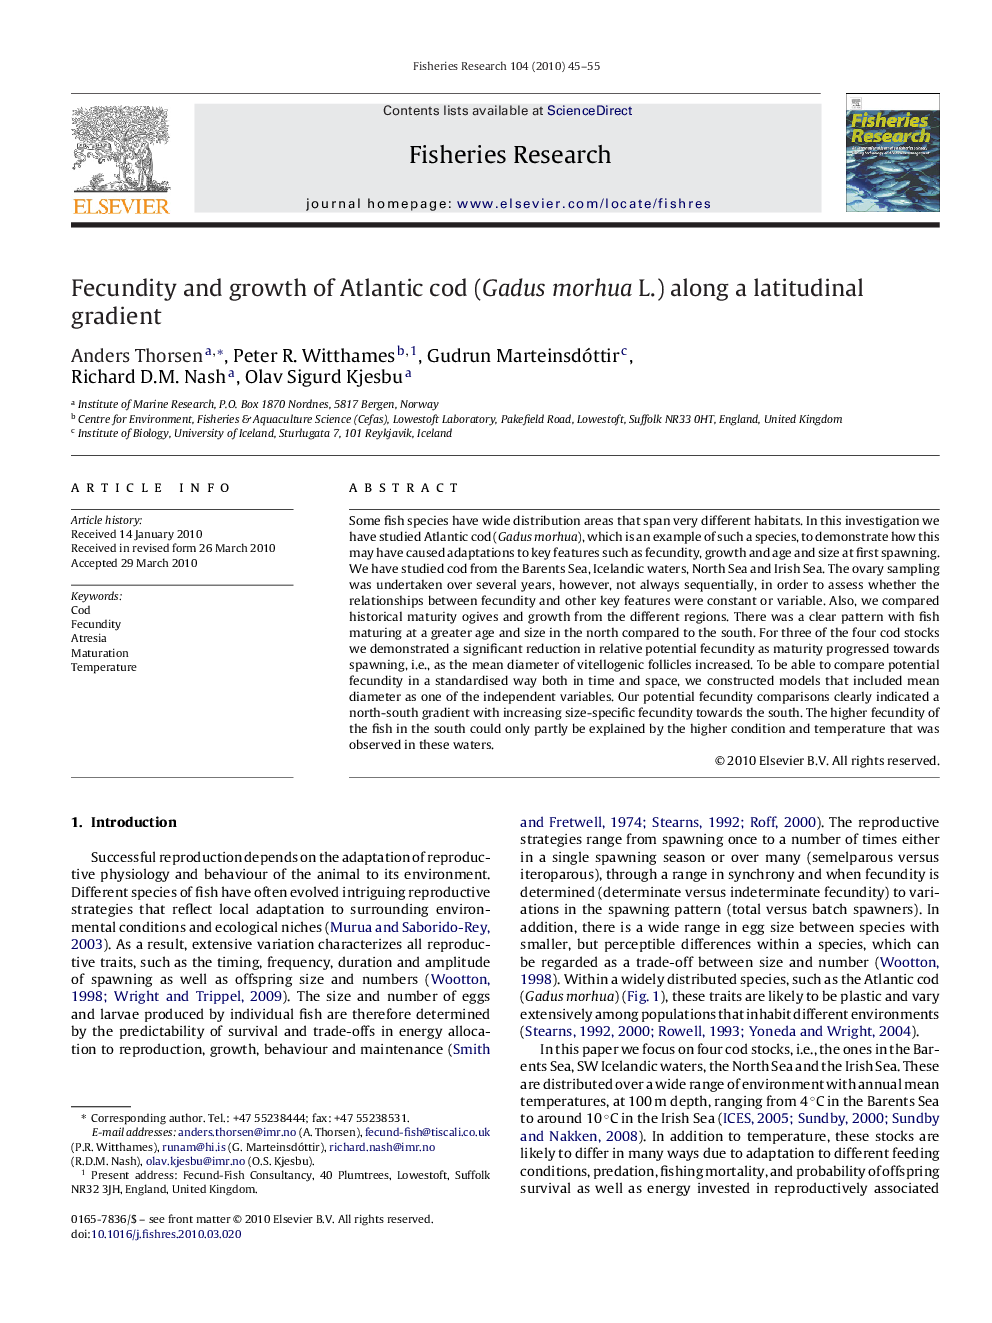 Fecundity and growth of Atlantic cod (Gadus morhua L.) along a latitudinal gradient